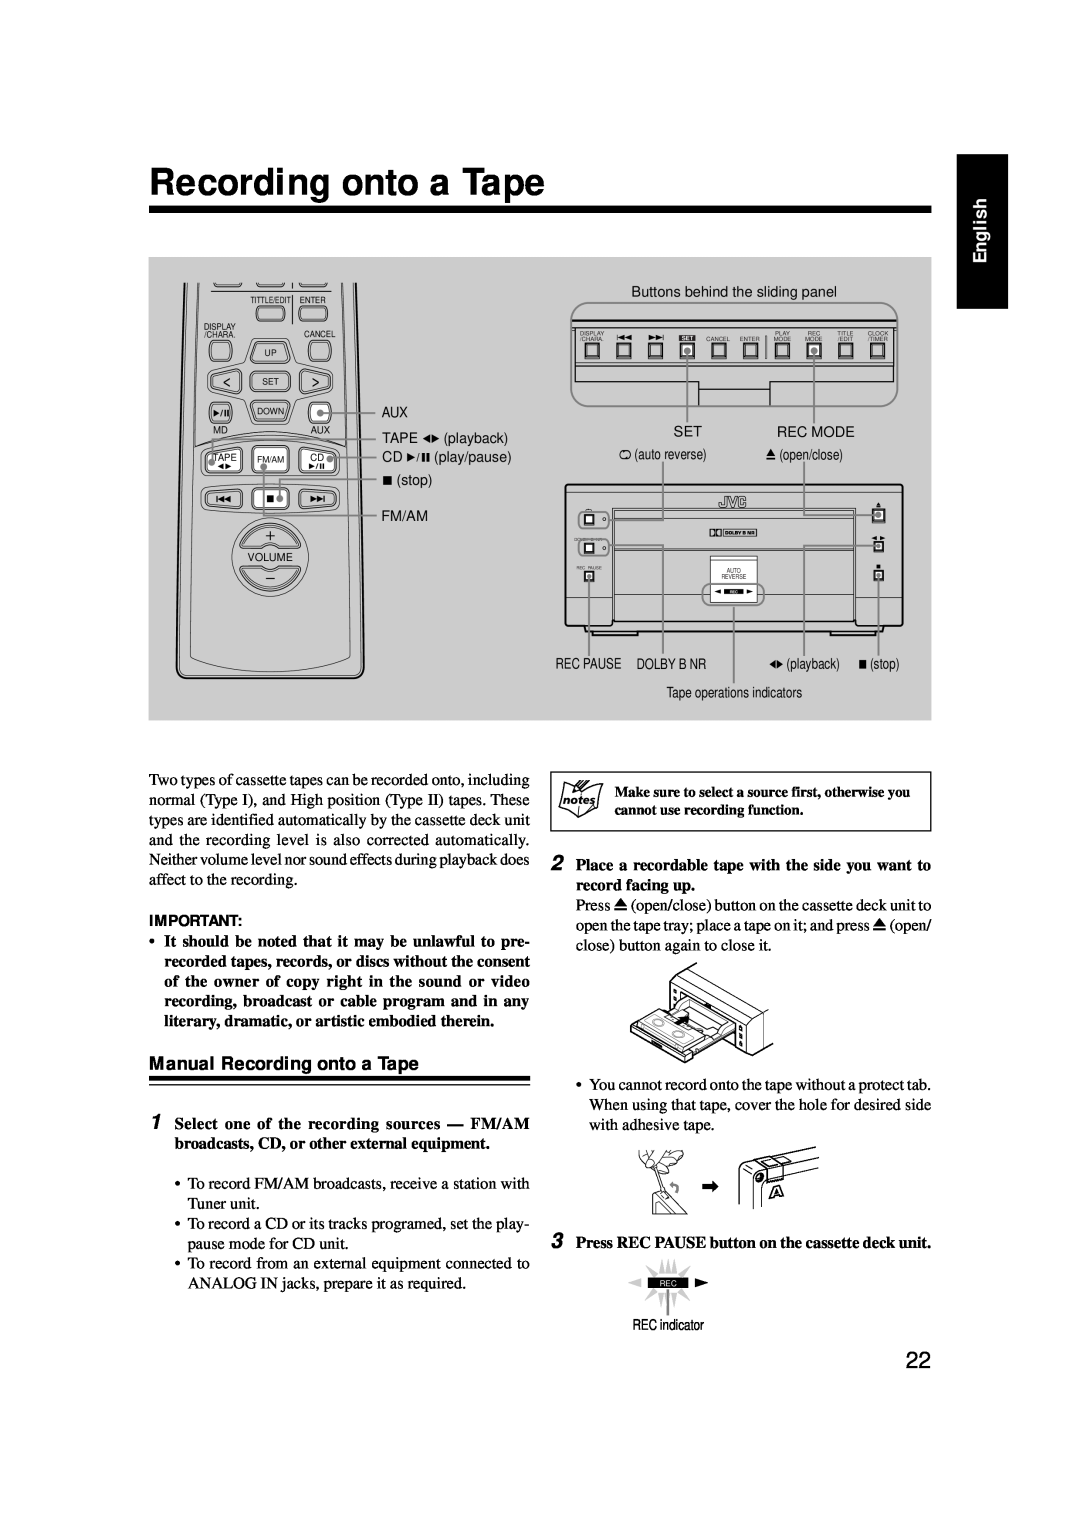 JVC LVT0375-001A, FS-G6, XT-UXG6 manual Manual Recording onto a Tape, English 